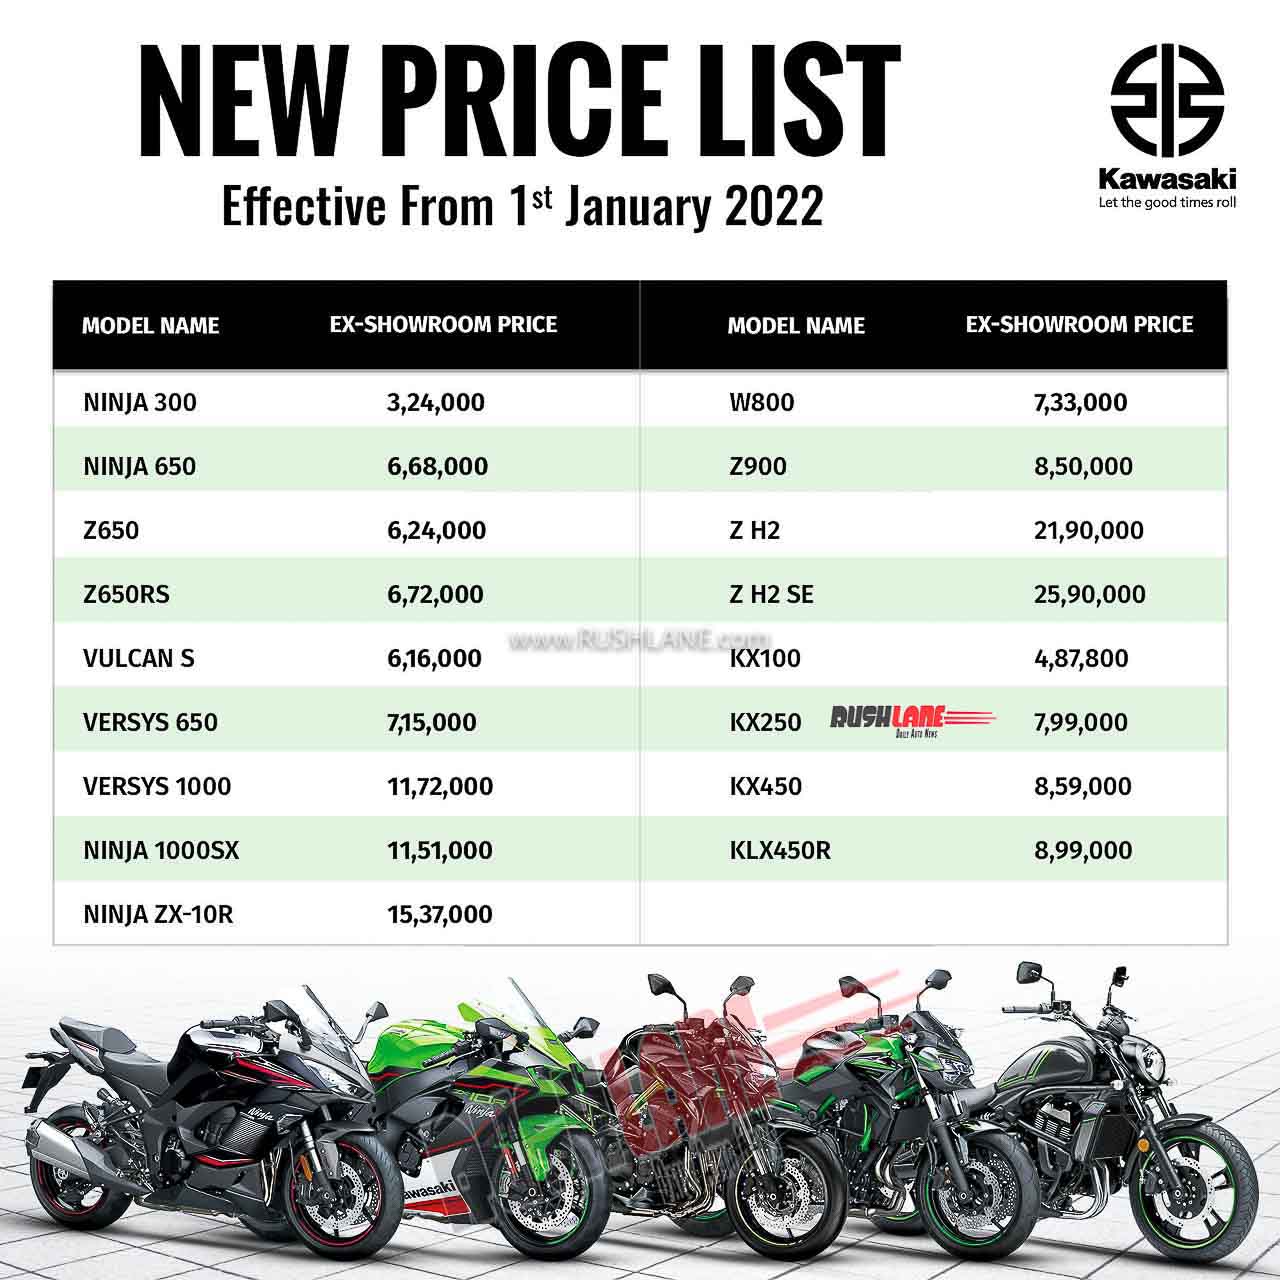 Kawasaki India Prices Jan 2022